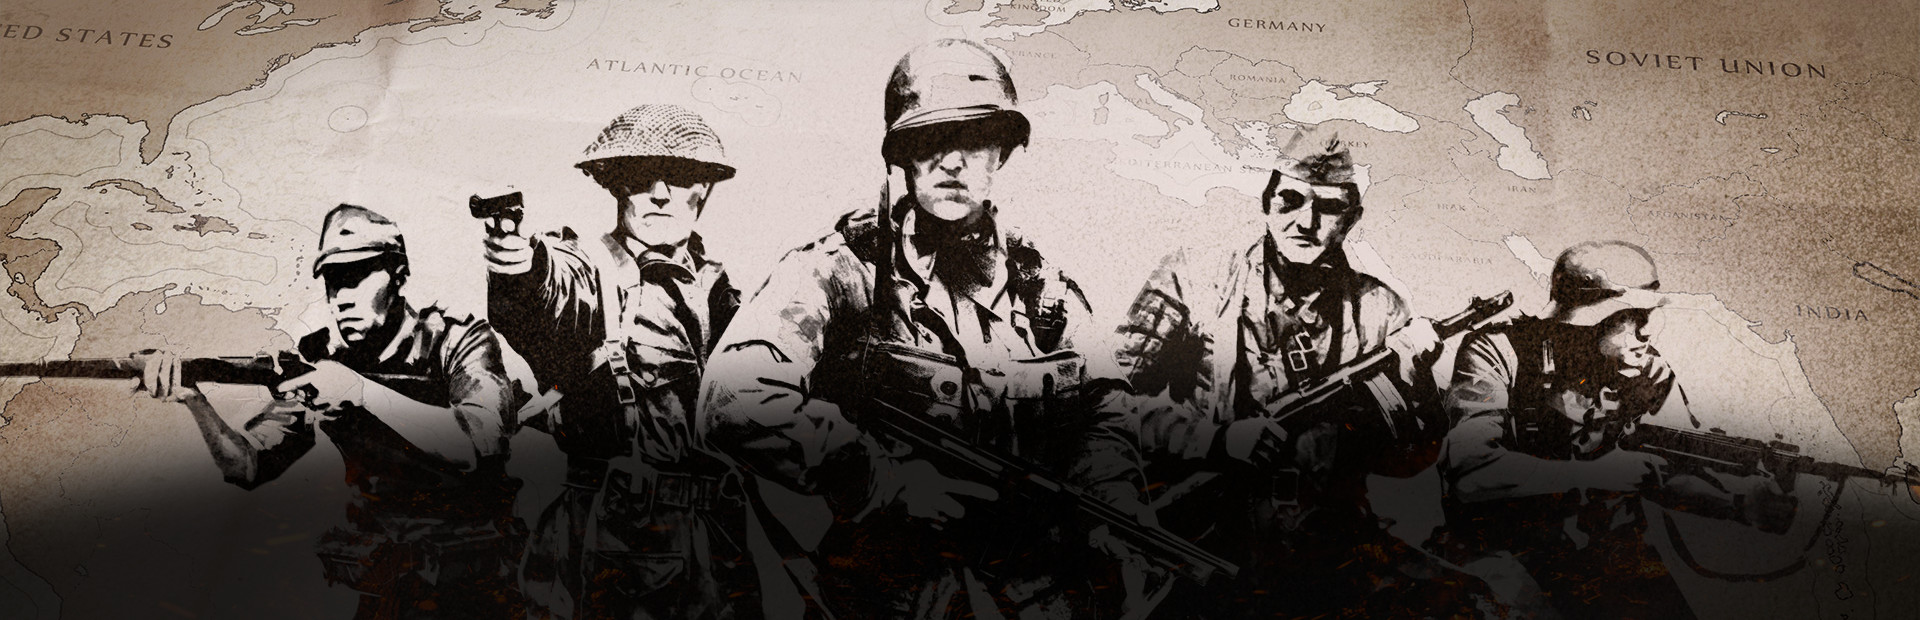 Order of Battle: World War II cover image